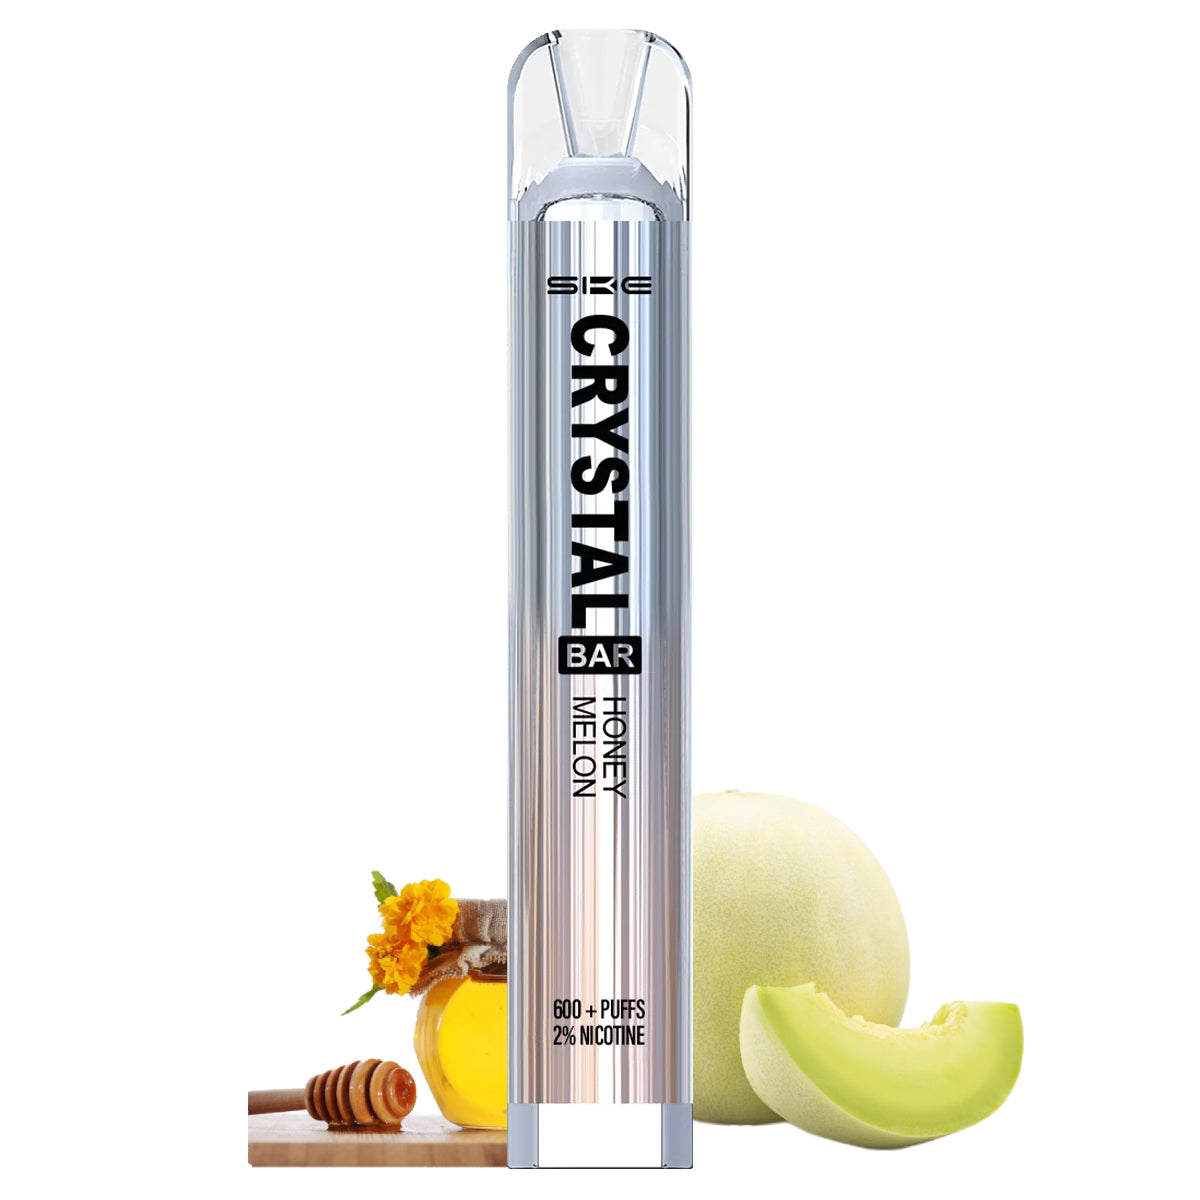 SKE Crystal Bar 2% Nicotine Disposable 600 Puffs Vape - Honey Melon